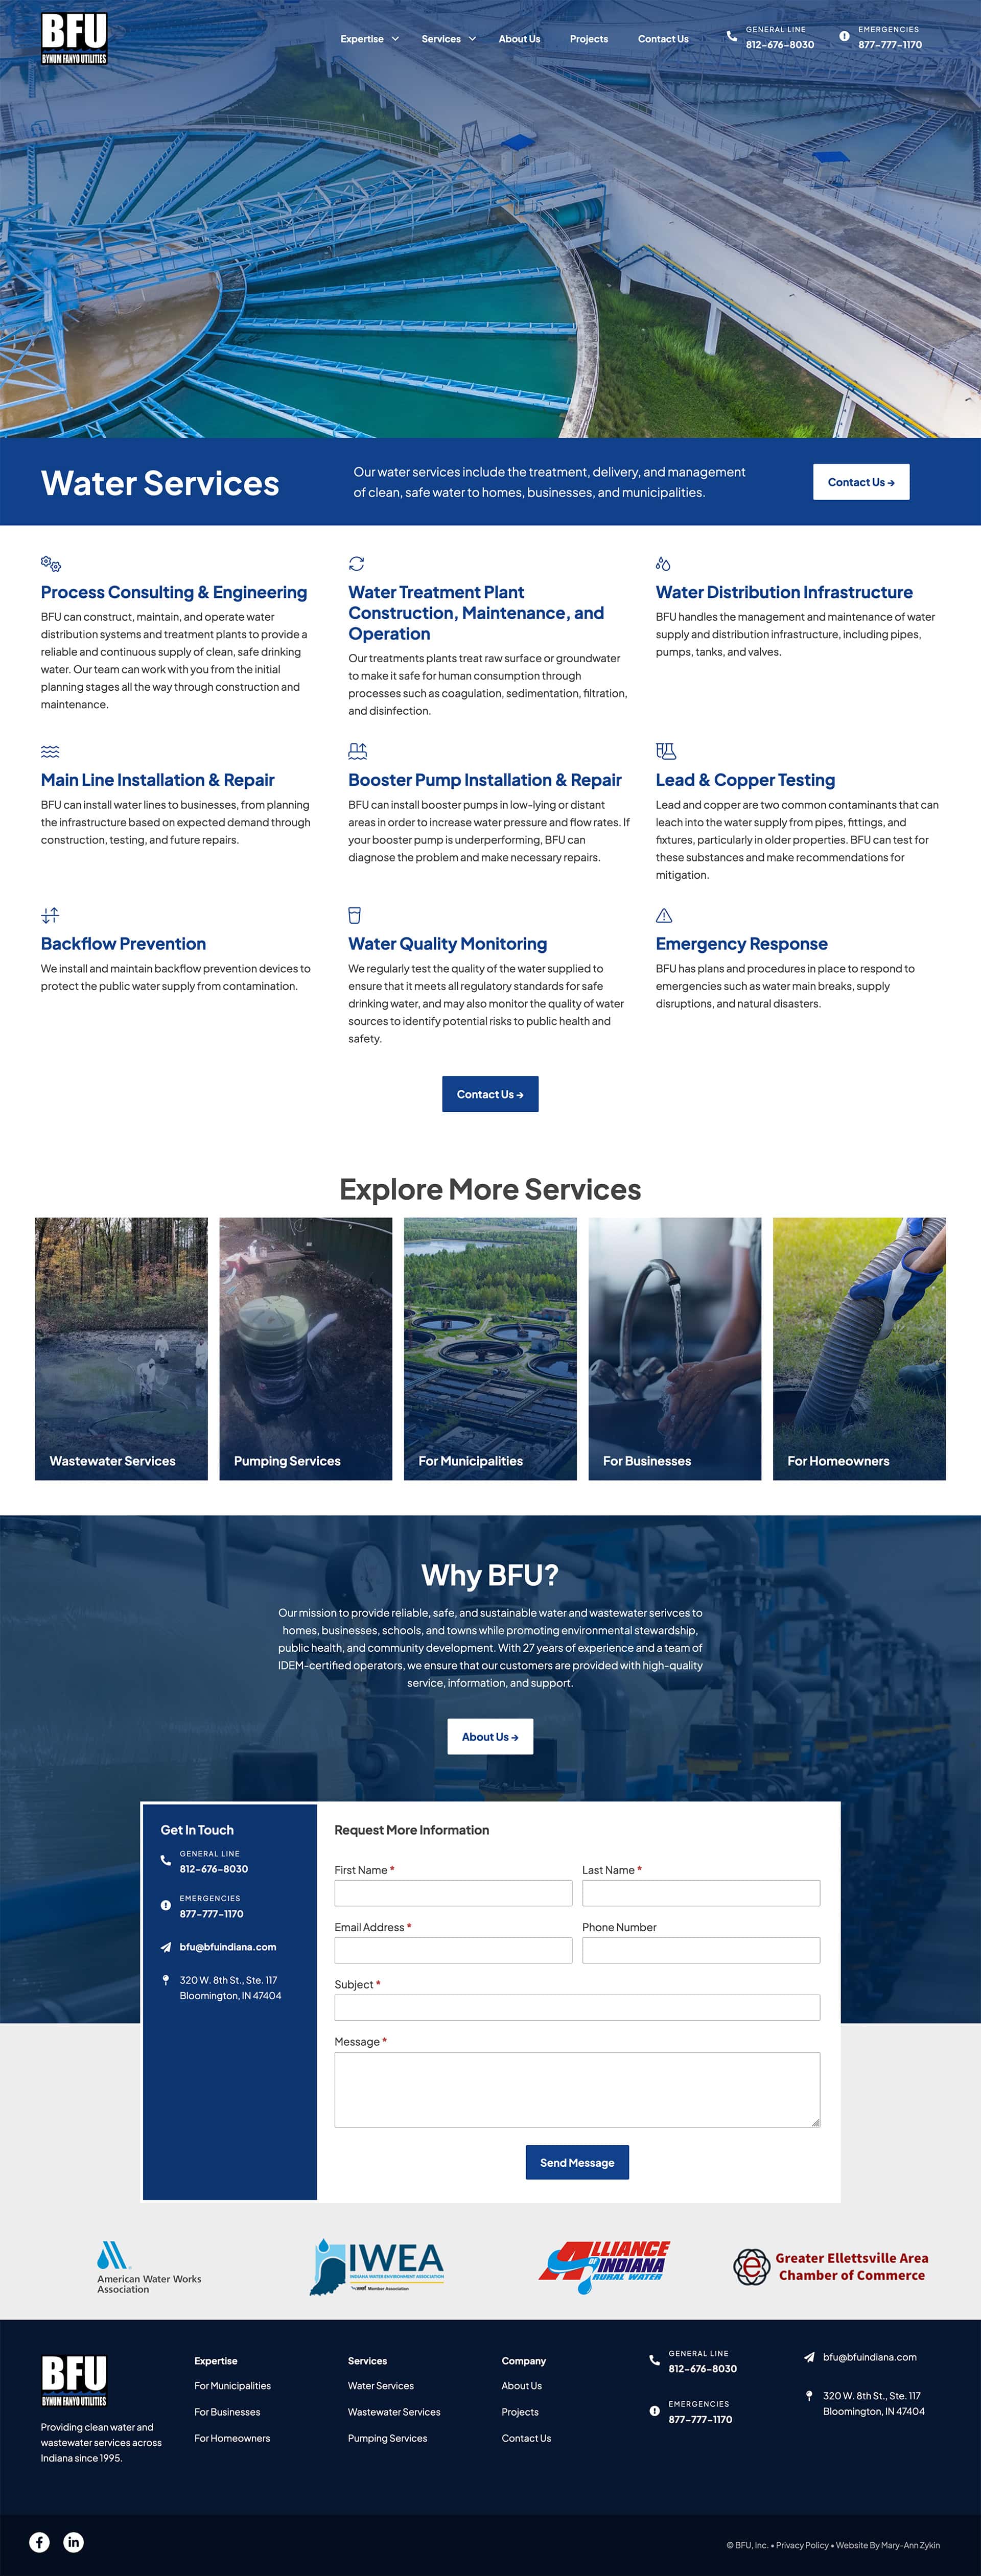 BFU Service Page